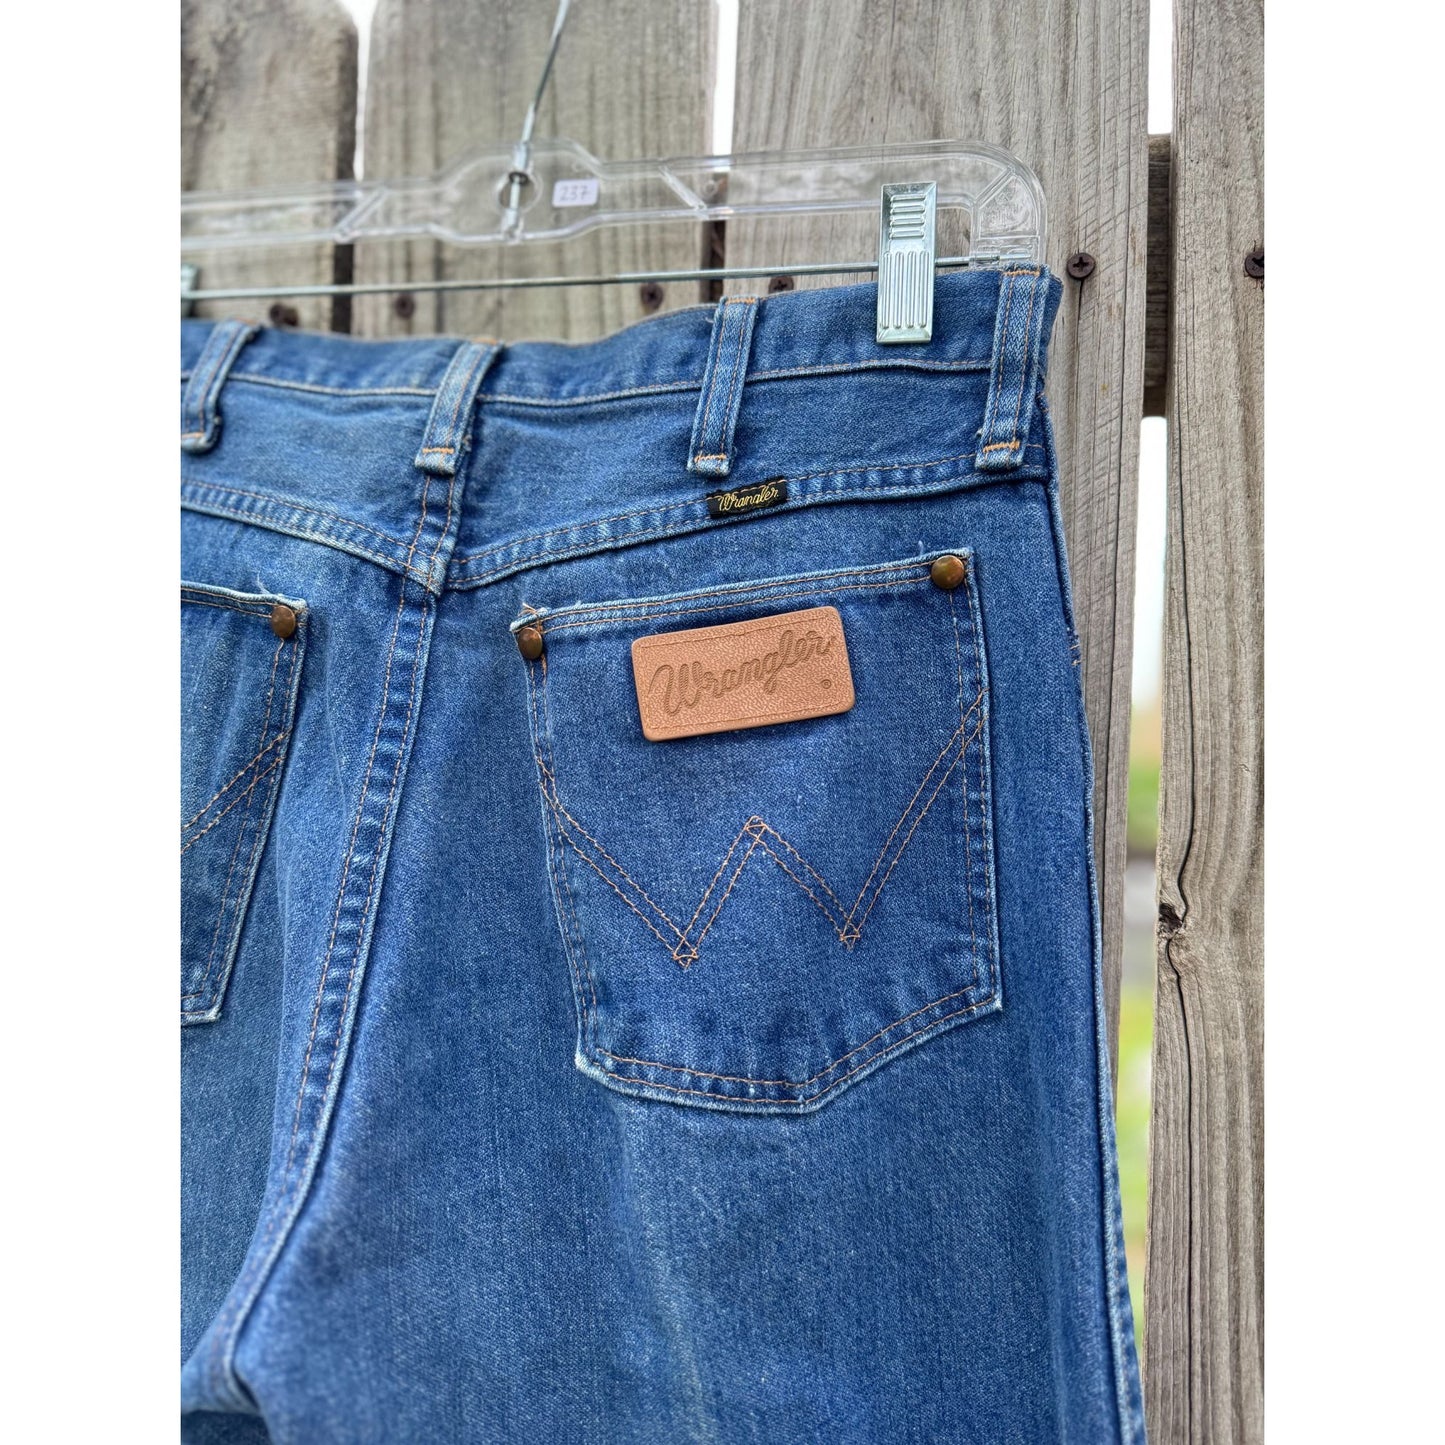 80's Wrangler Dark Wash High Rise Denim Jeans 30 x 33